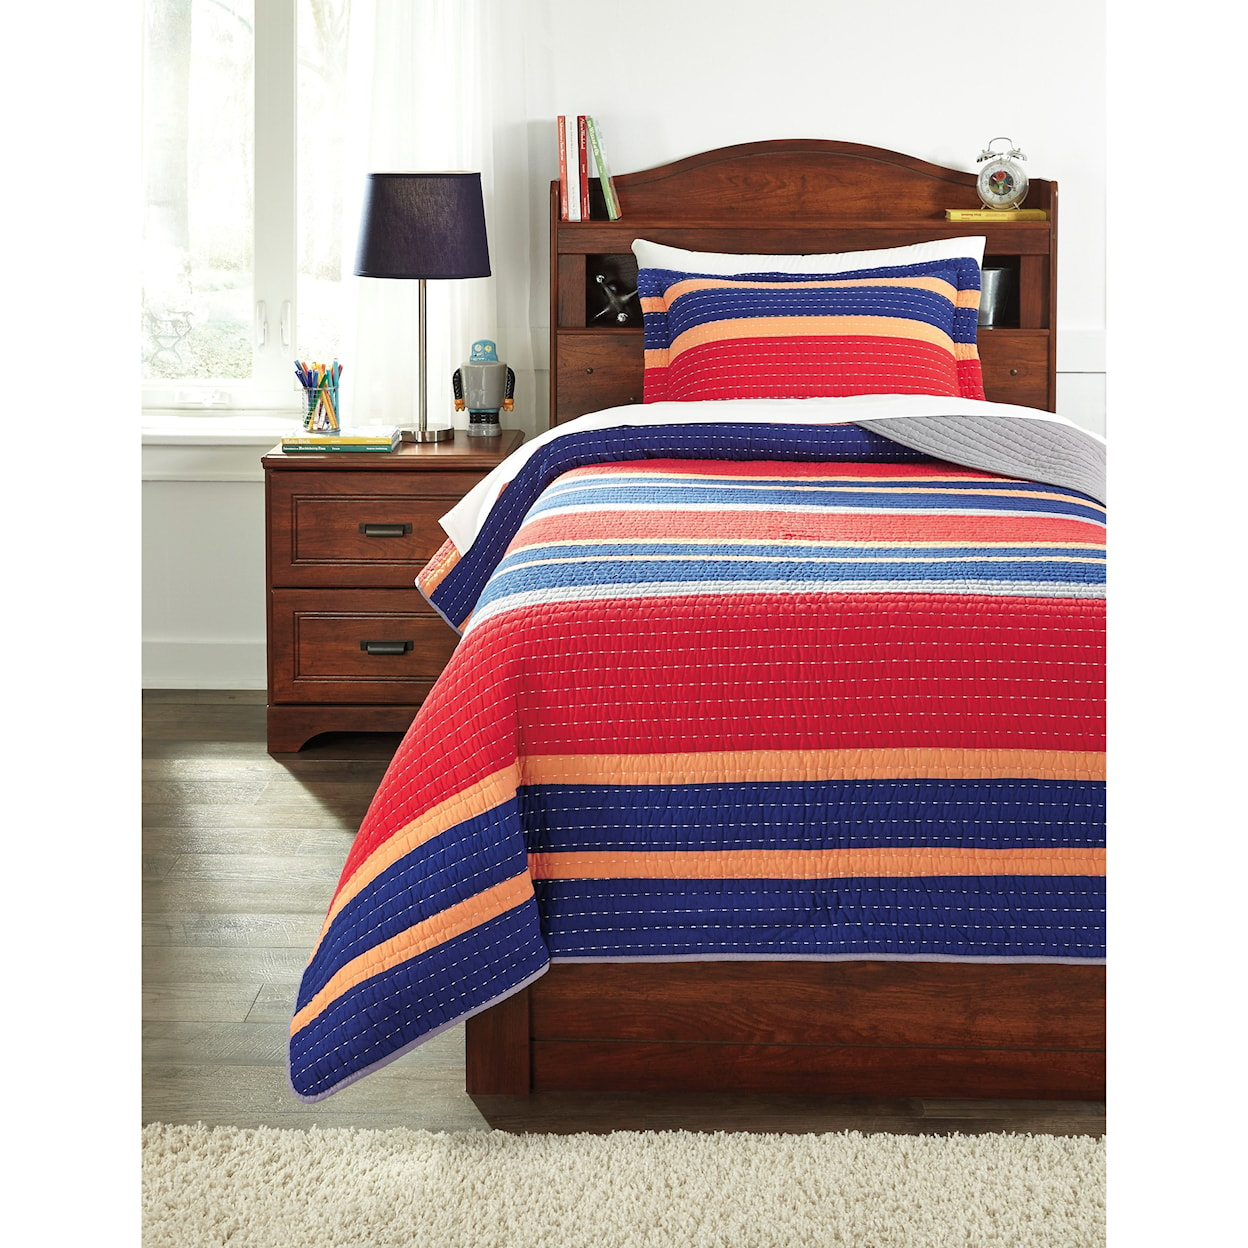 Ashley Furniture Signature Design Bedding Sets Twin Damond Multi Quilt Set